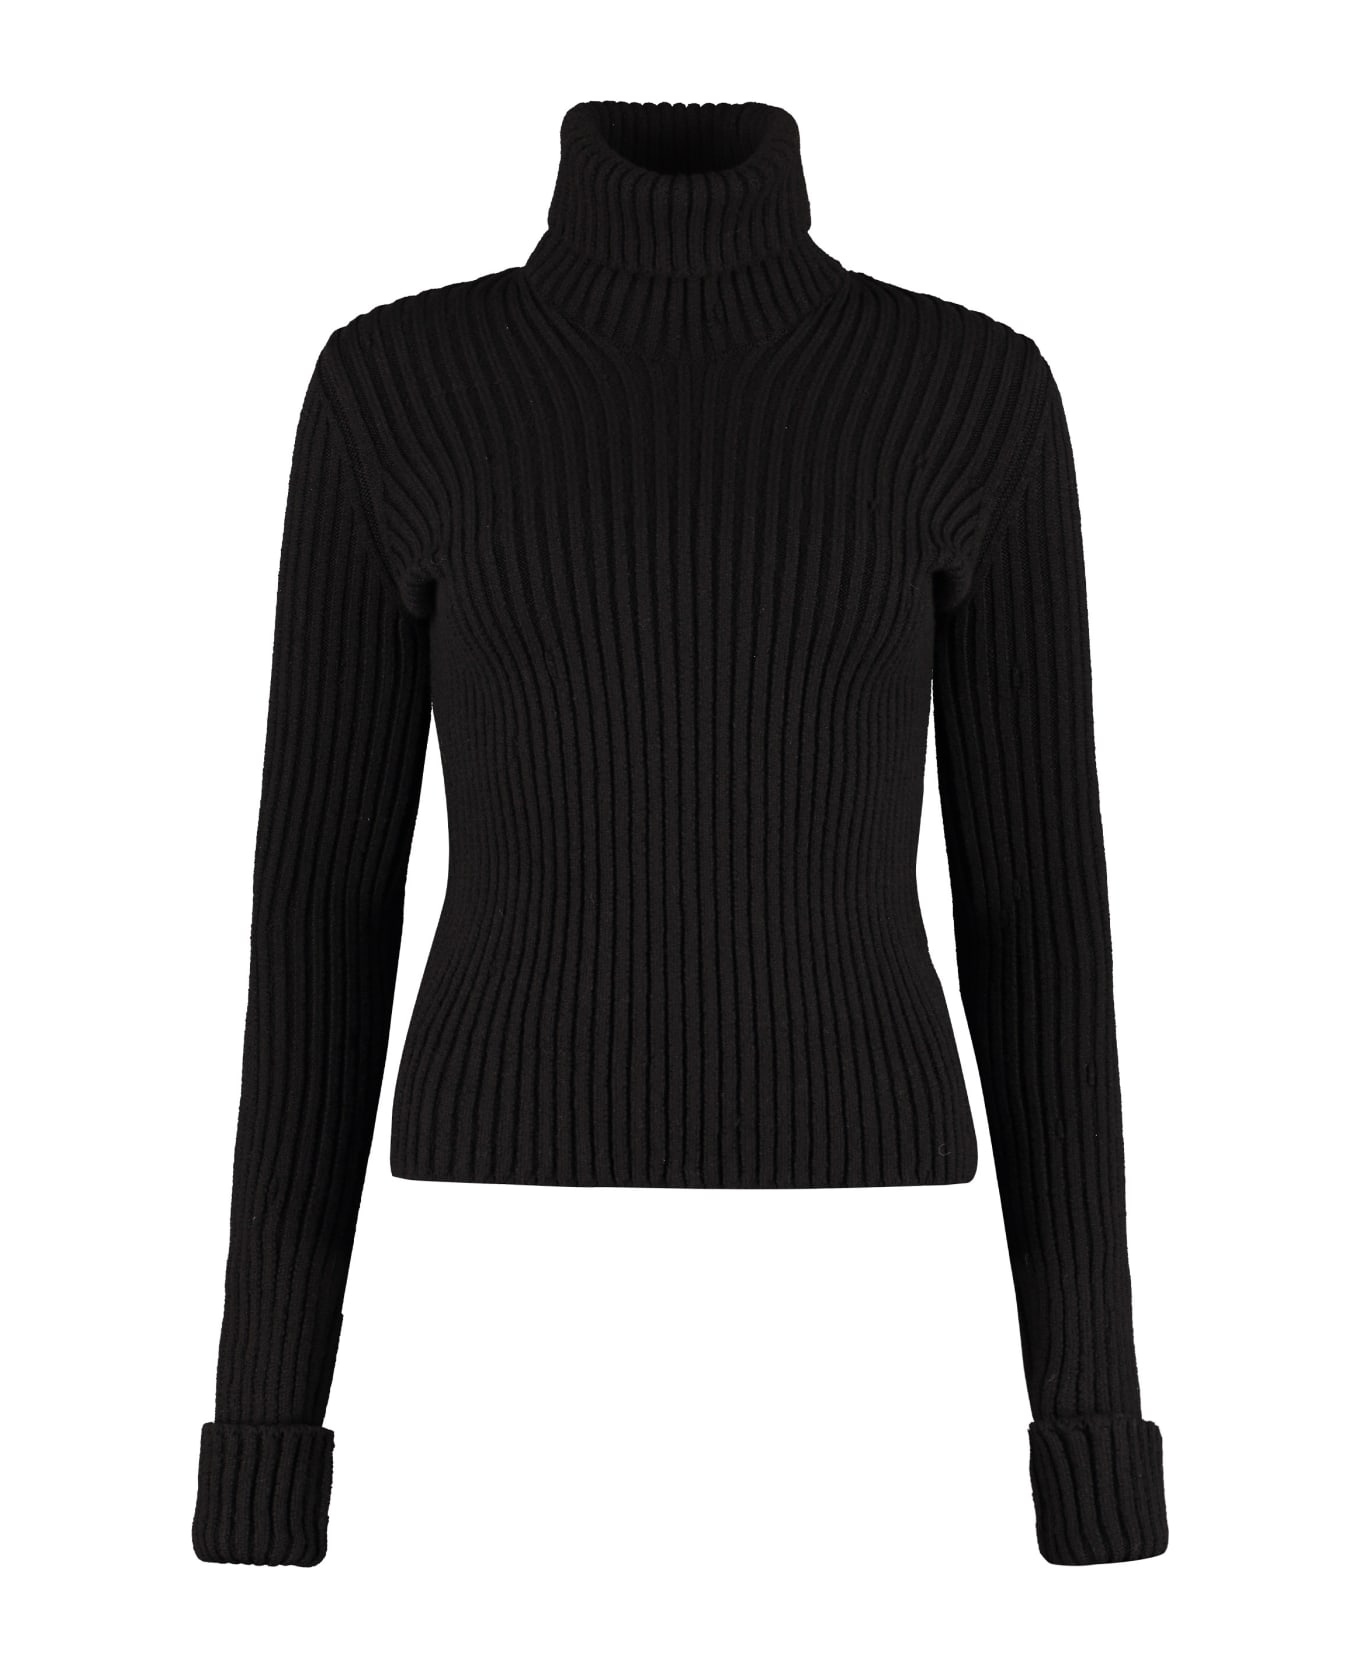 Bottega Veneta Ribbed Turtleneck Sweater - black